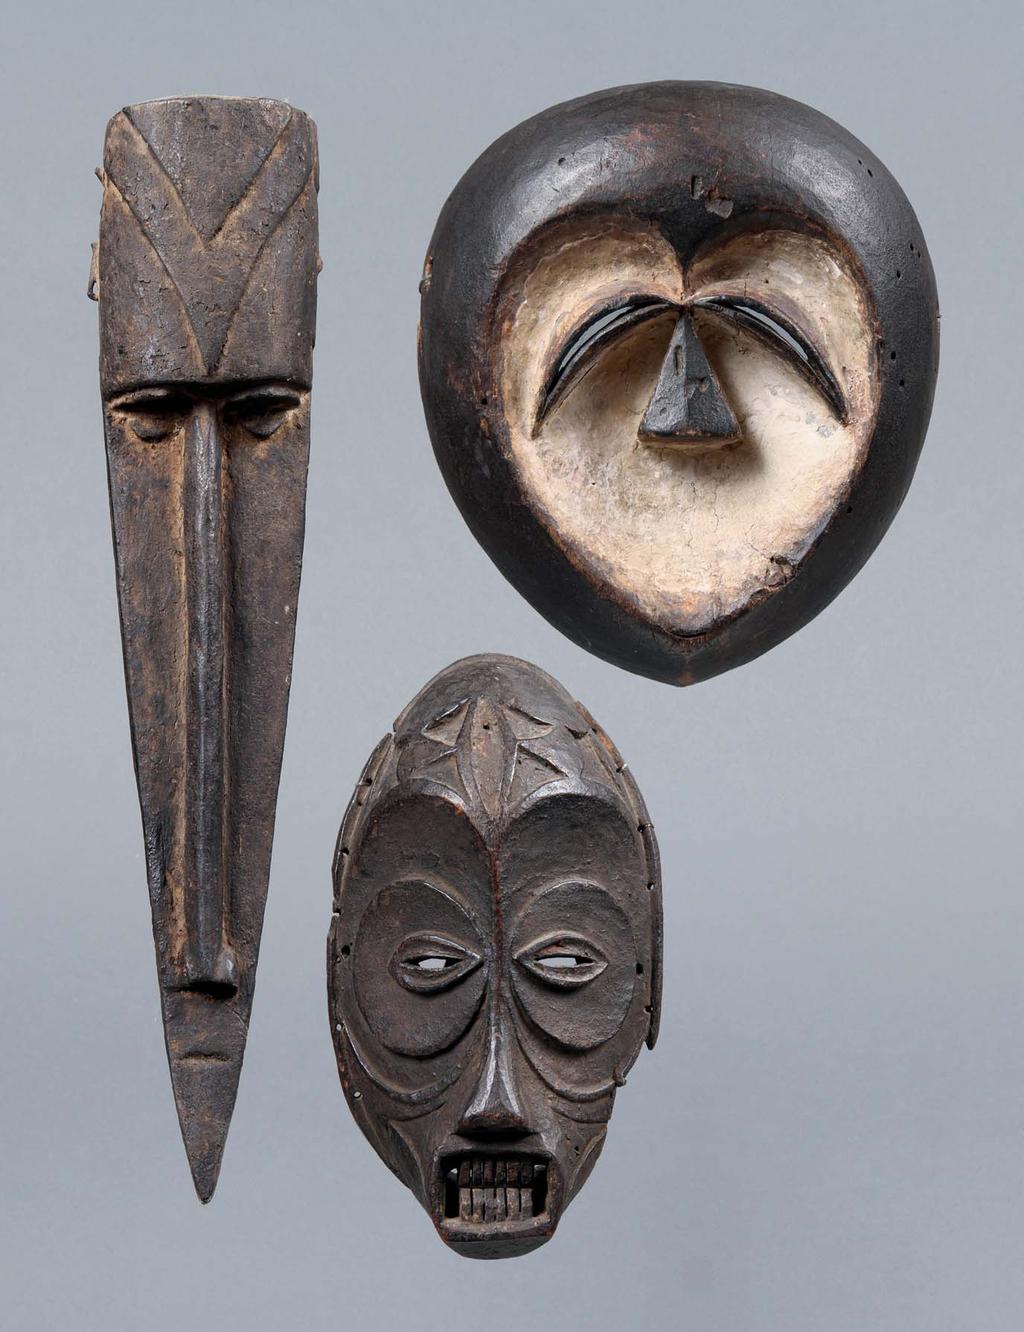 JAY T. LAST FIG. 8 (above): Mask. Kwele, Gabon. Wood, pigment. H: 27 cm. FIG. 9 (far left): Mask.